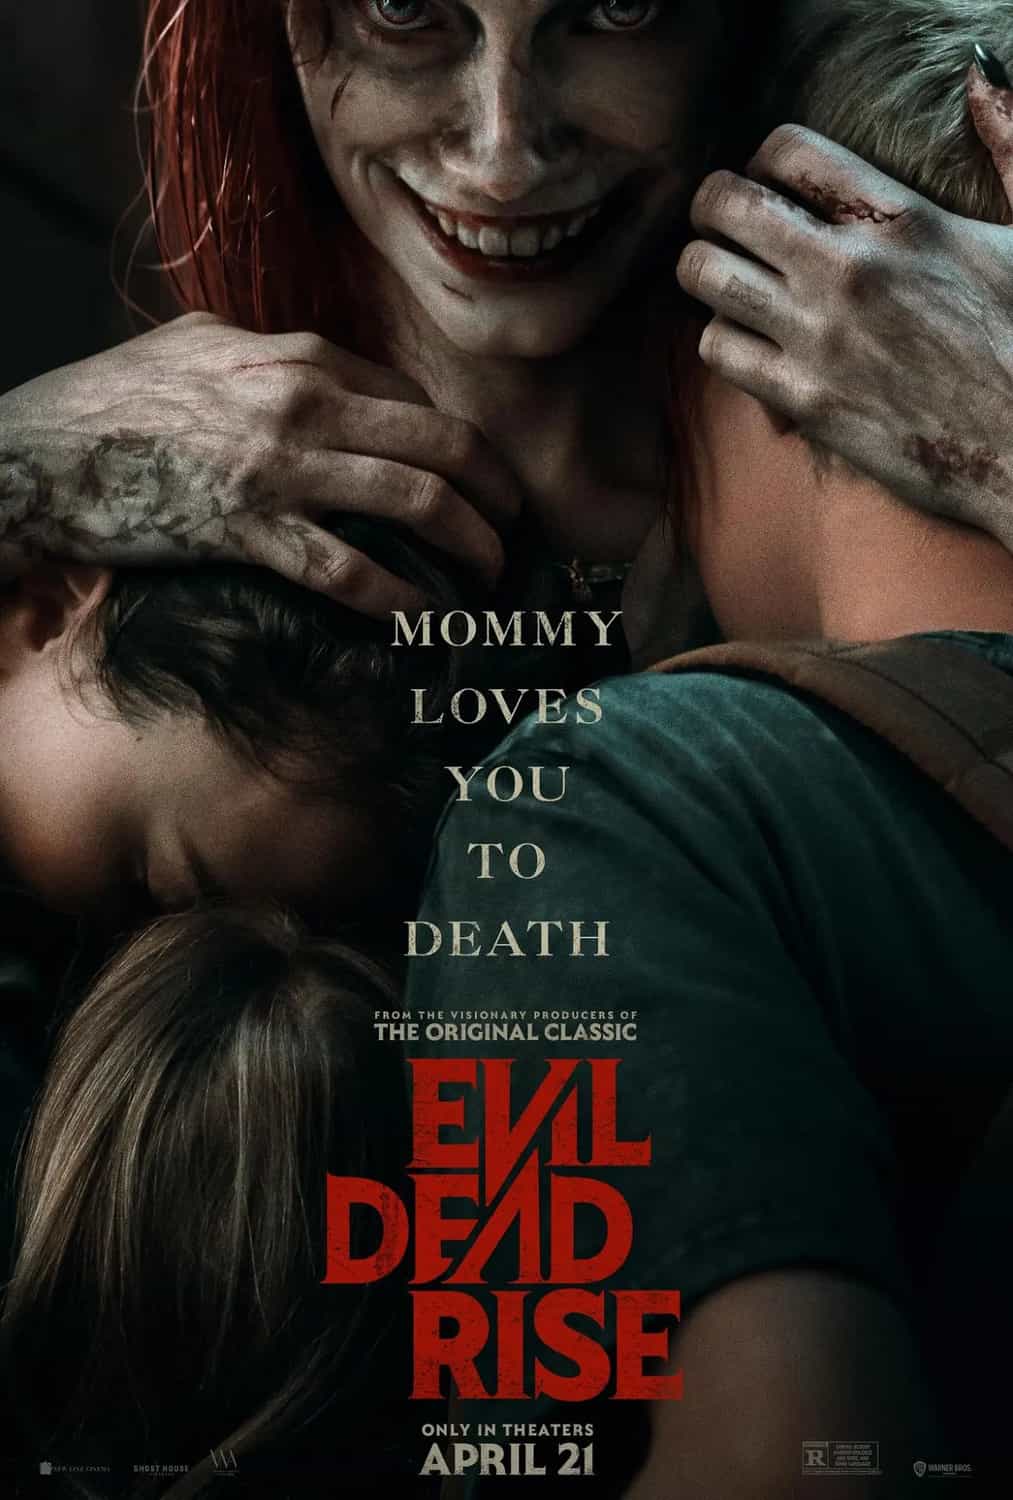 New poster released for Evil Dead Rise starring Alyssa Sutherland	 - movie UK release date 21st April 2023 #evildeadrise